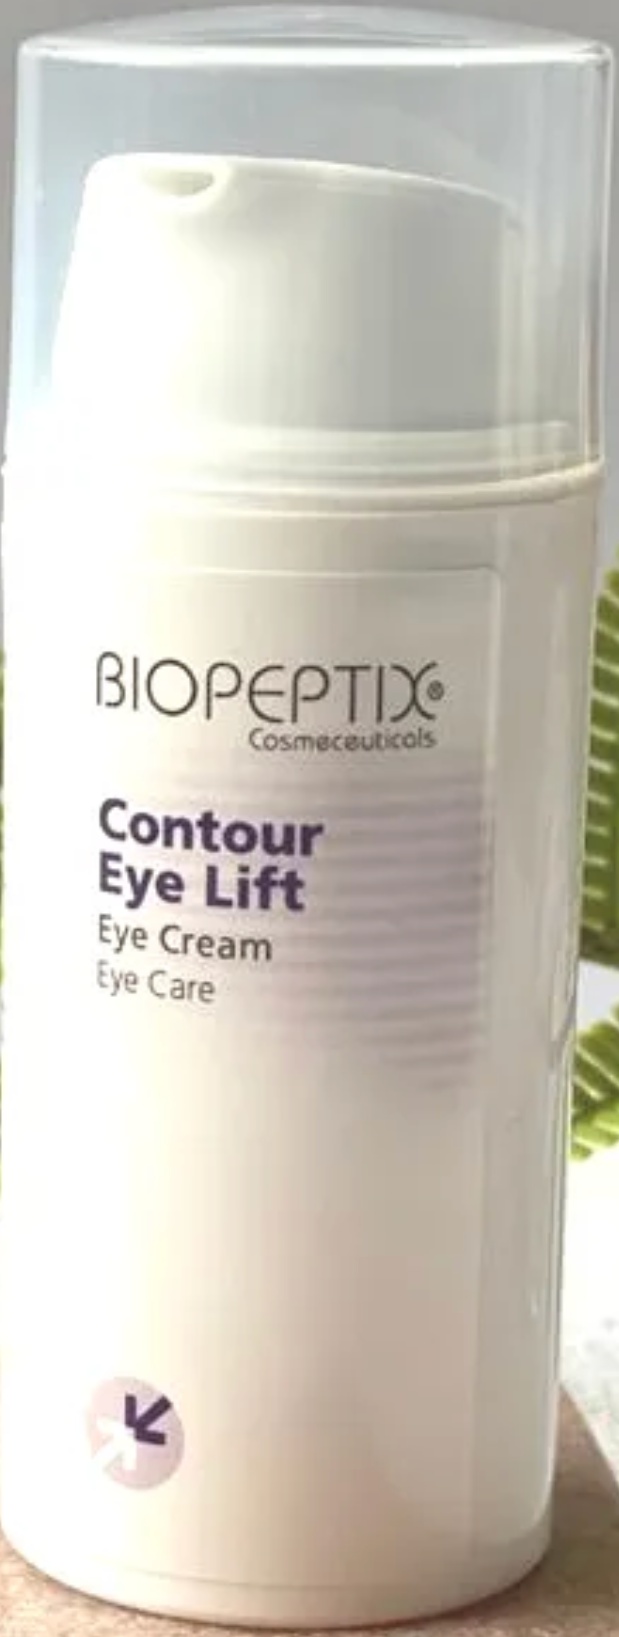 Biopeptix Contour Eye Lift